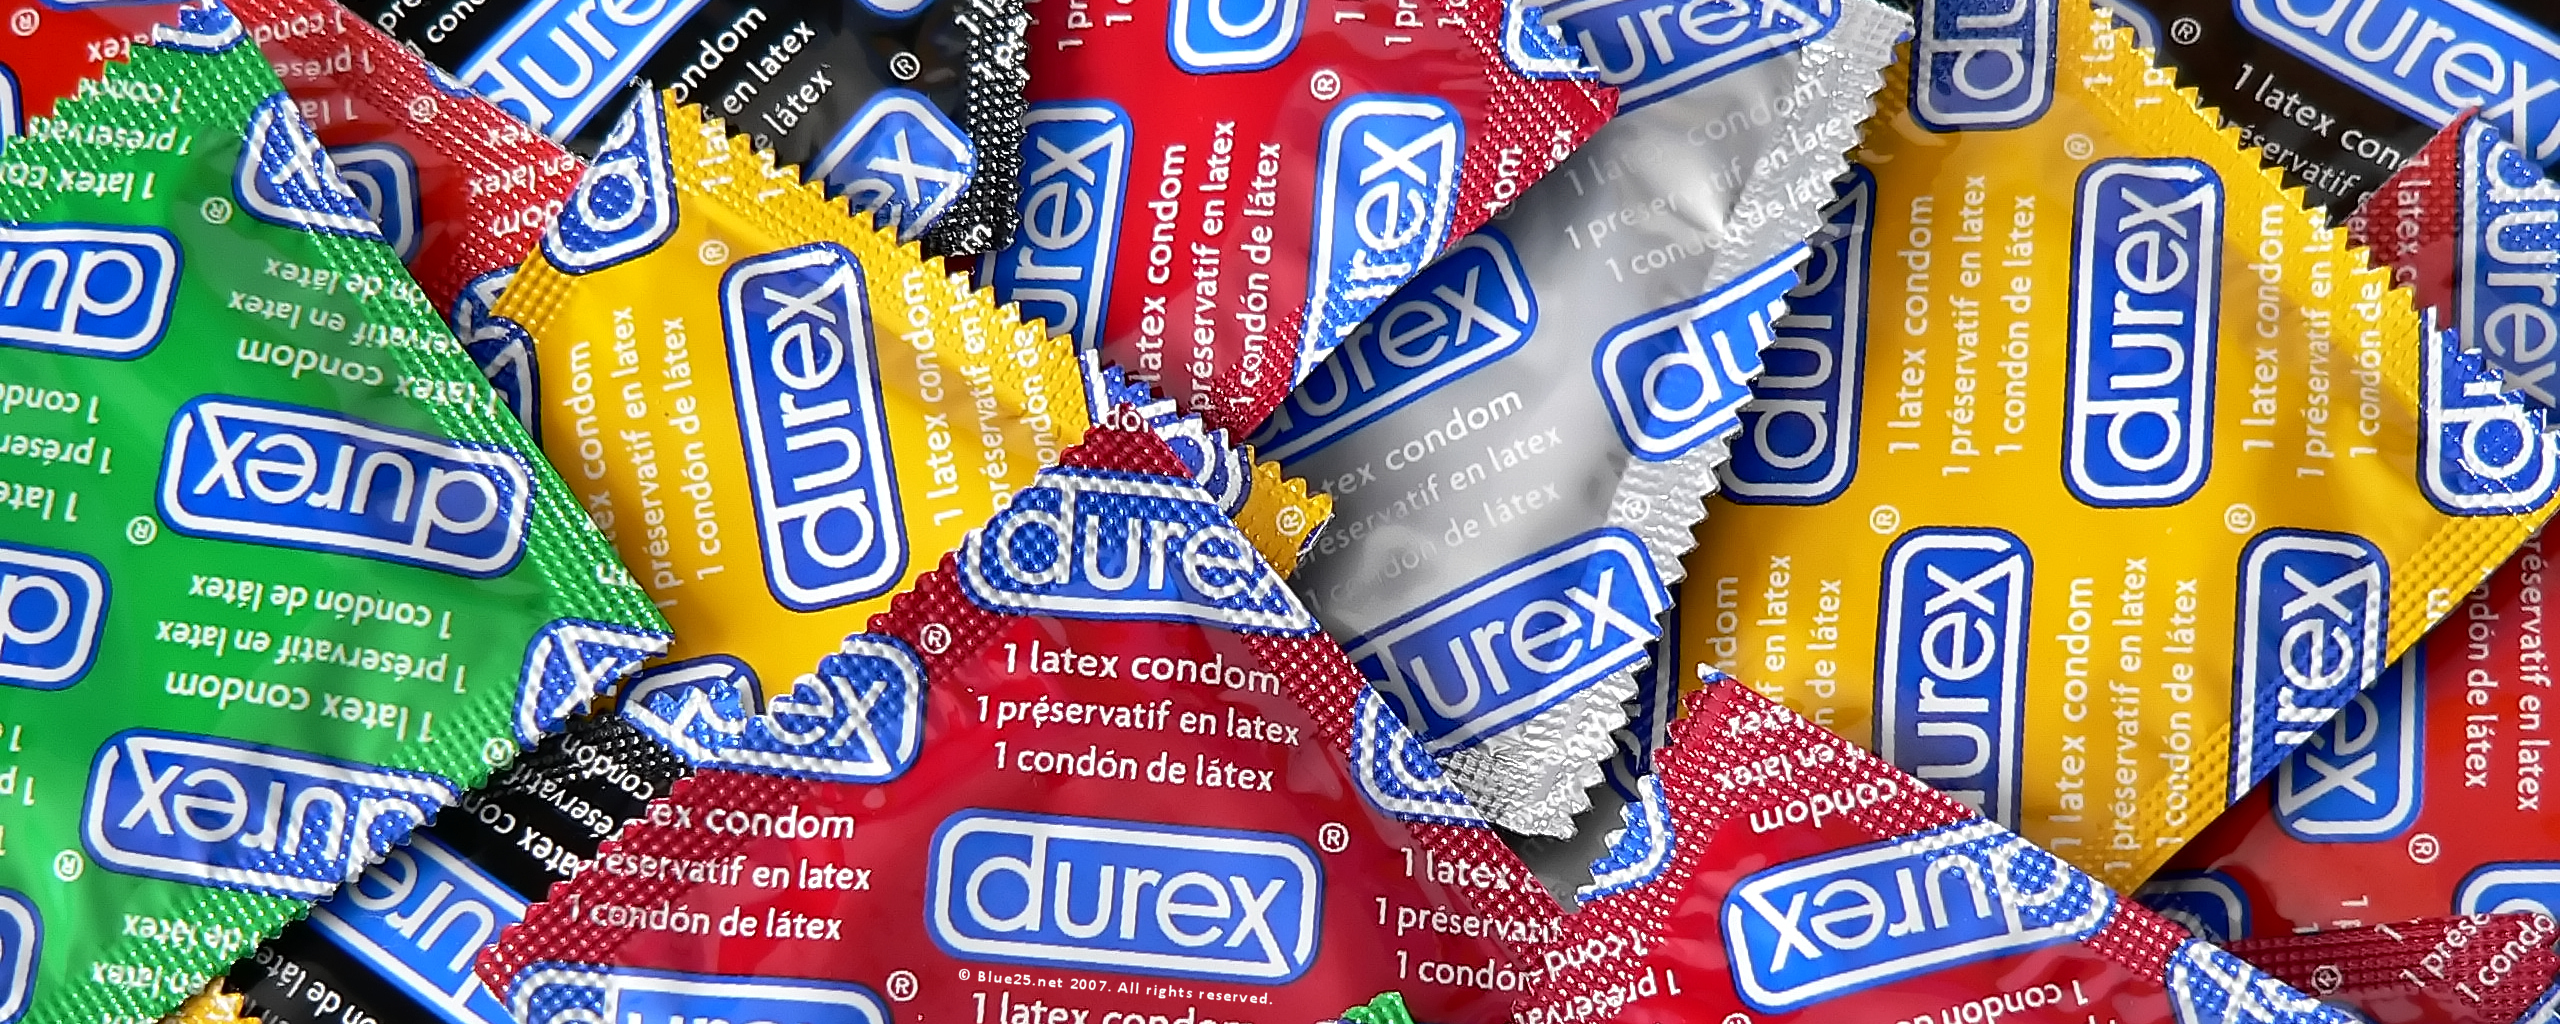 Durex Love ขนาด 52.5 มม. ถุงยางอนามัยผิวเรียบมาตรฐาน มีสารหล่อลื่นเซ็นซิทอล ที่มีความละเอียดและนุ่มนวลเพิ่มขึ้น